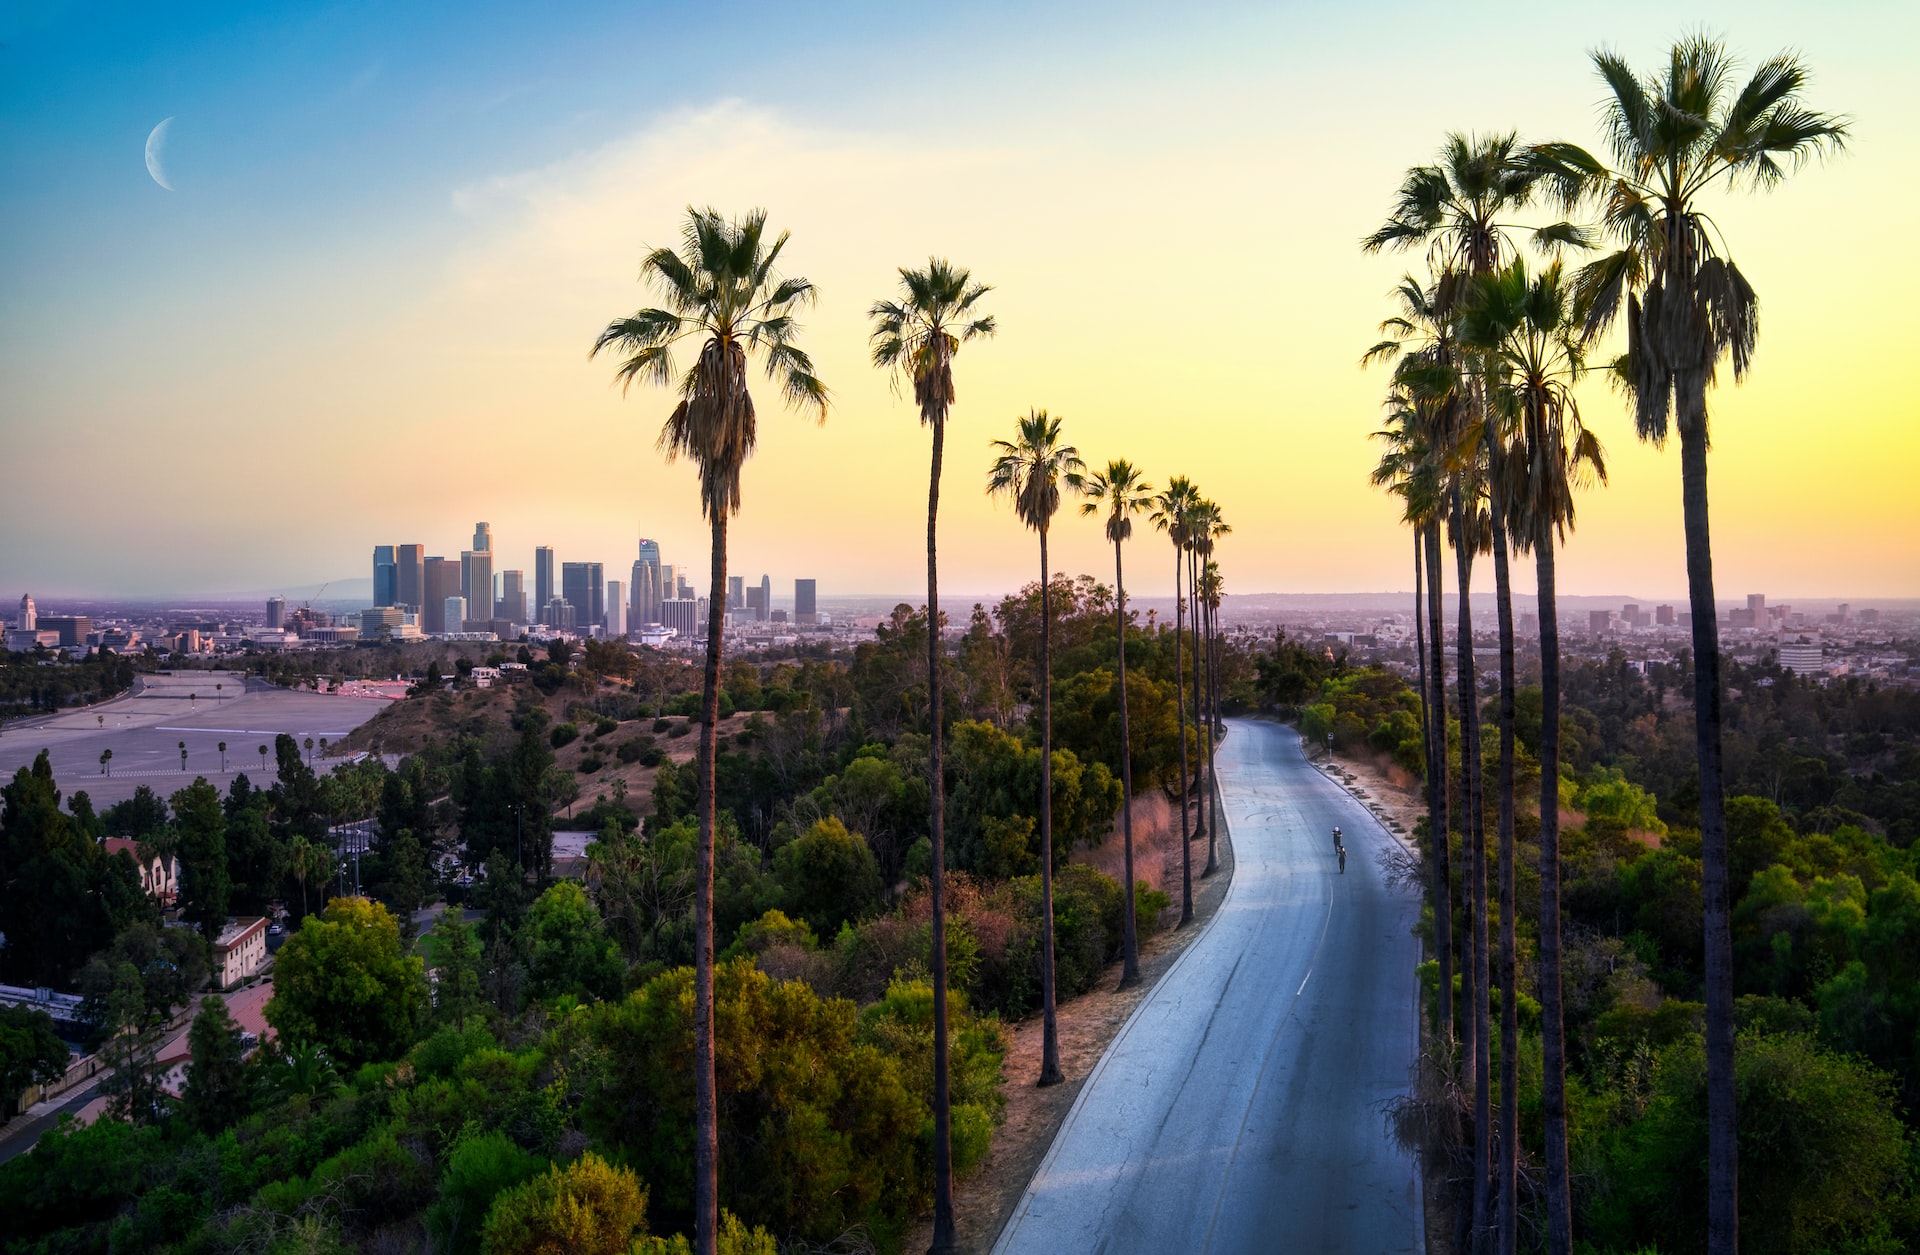 Los Angeles behind palm trees